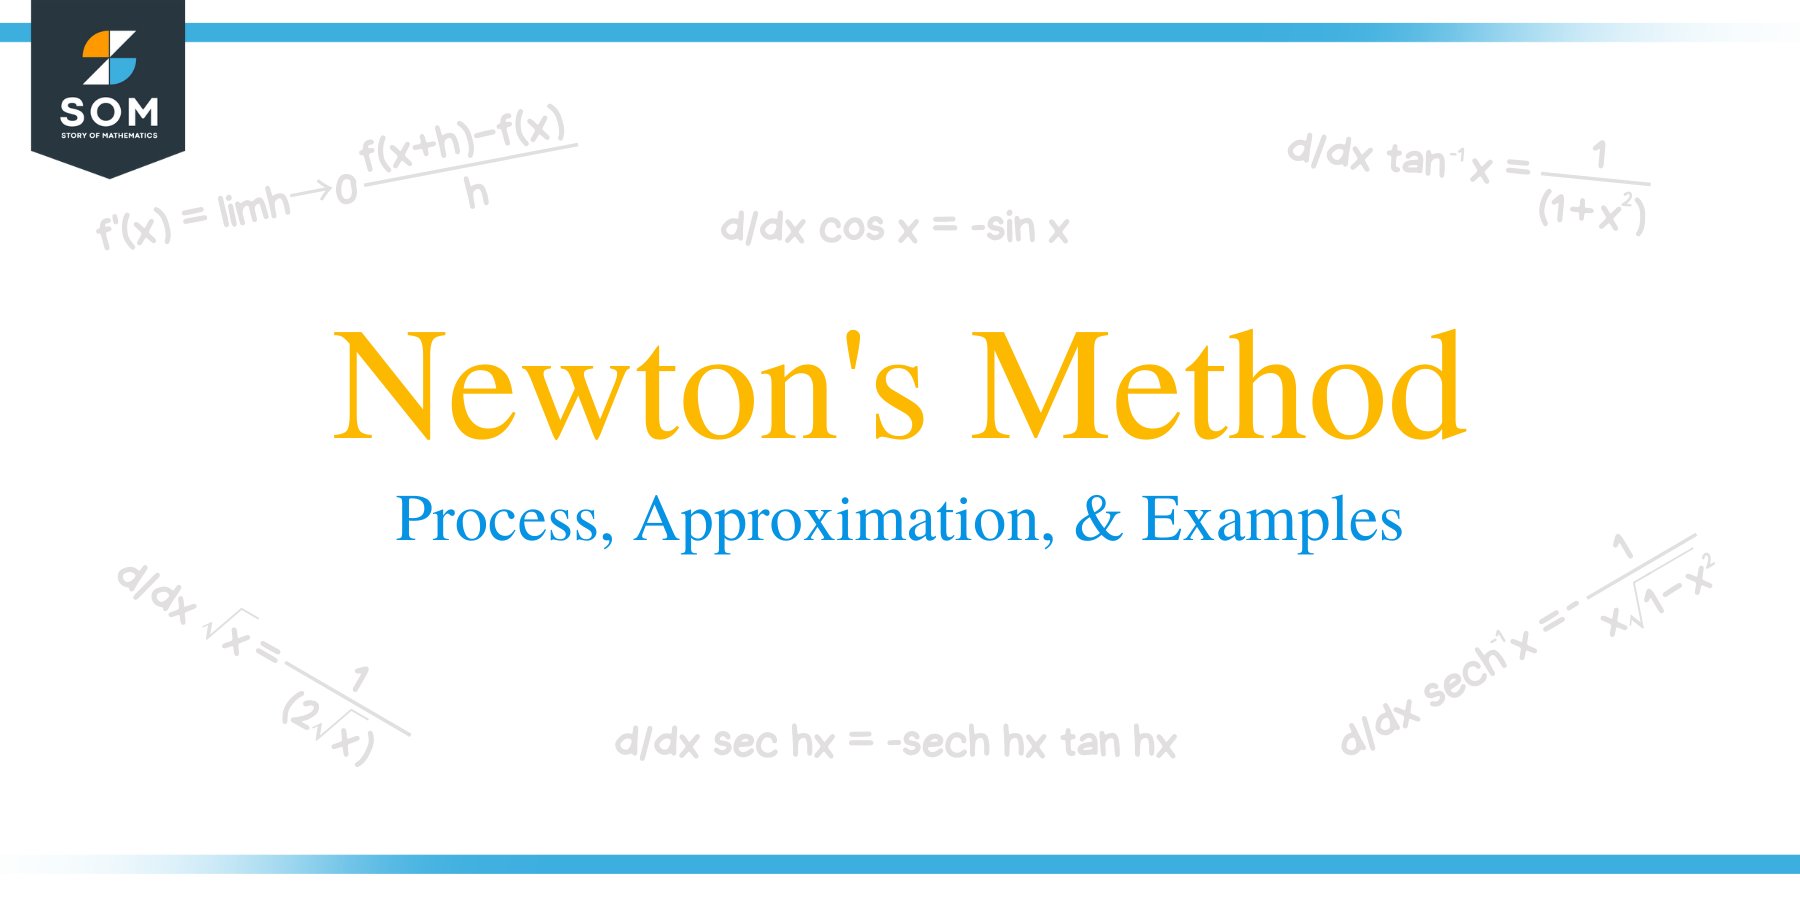 Newton's method